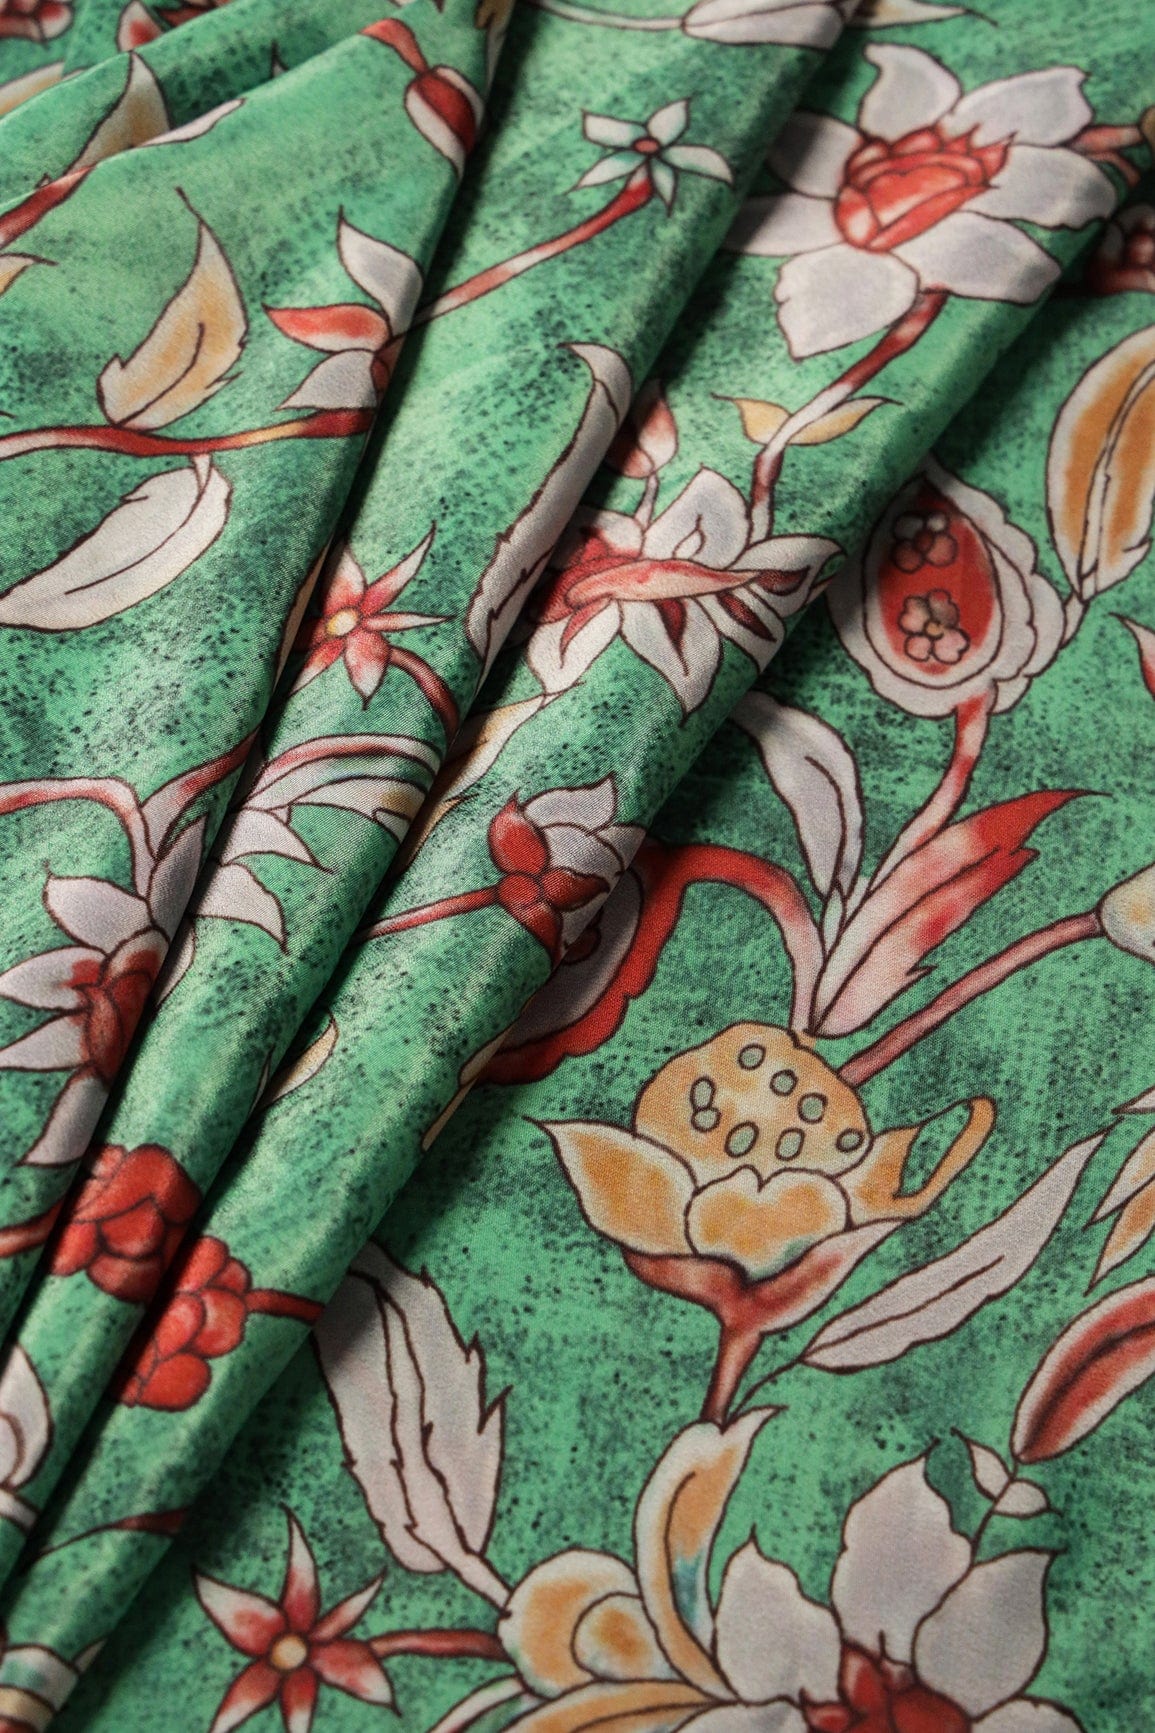 doeraa Prints Red And Light Grey Floral Pattern Digital Print On Light Green Malai Crepe Fabric